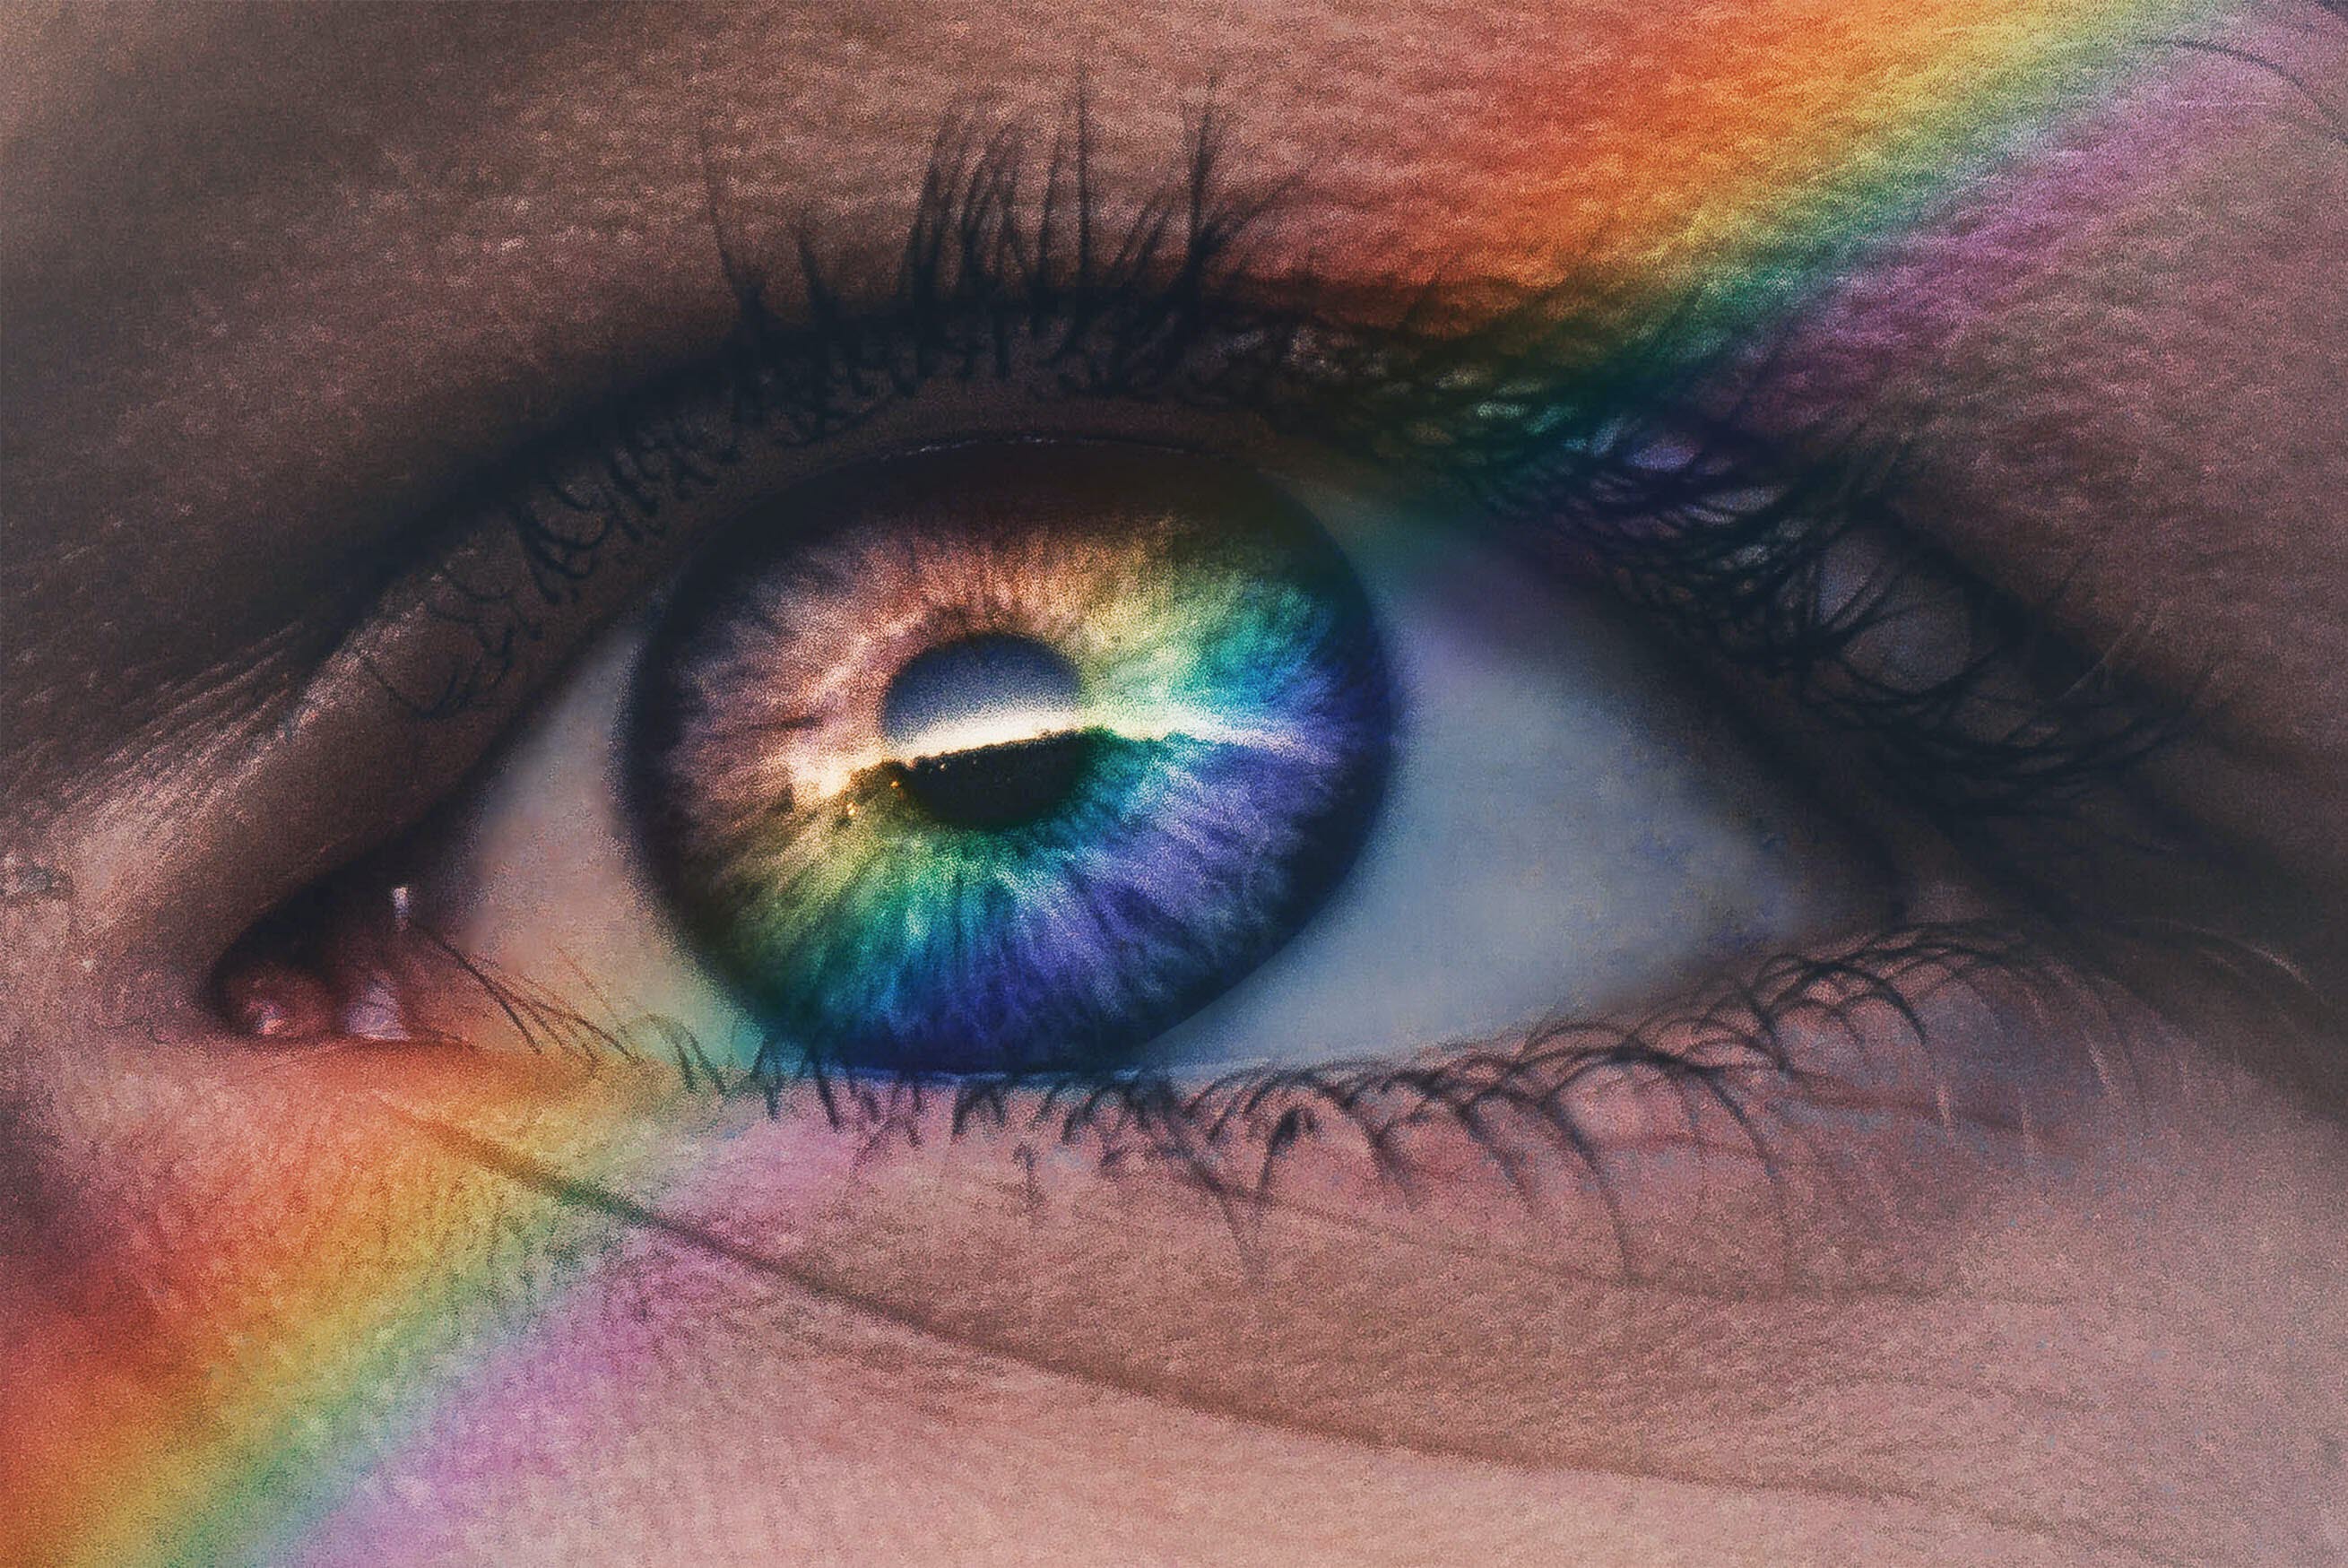 Eye with rainbow colors